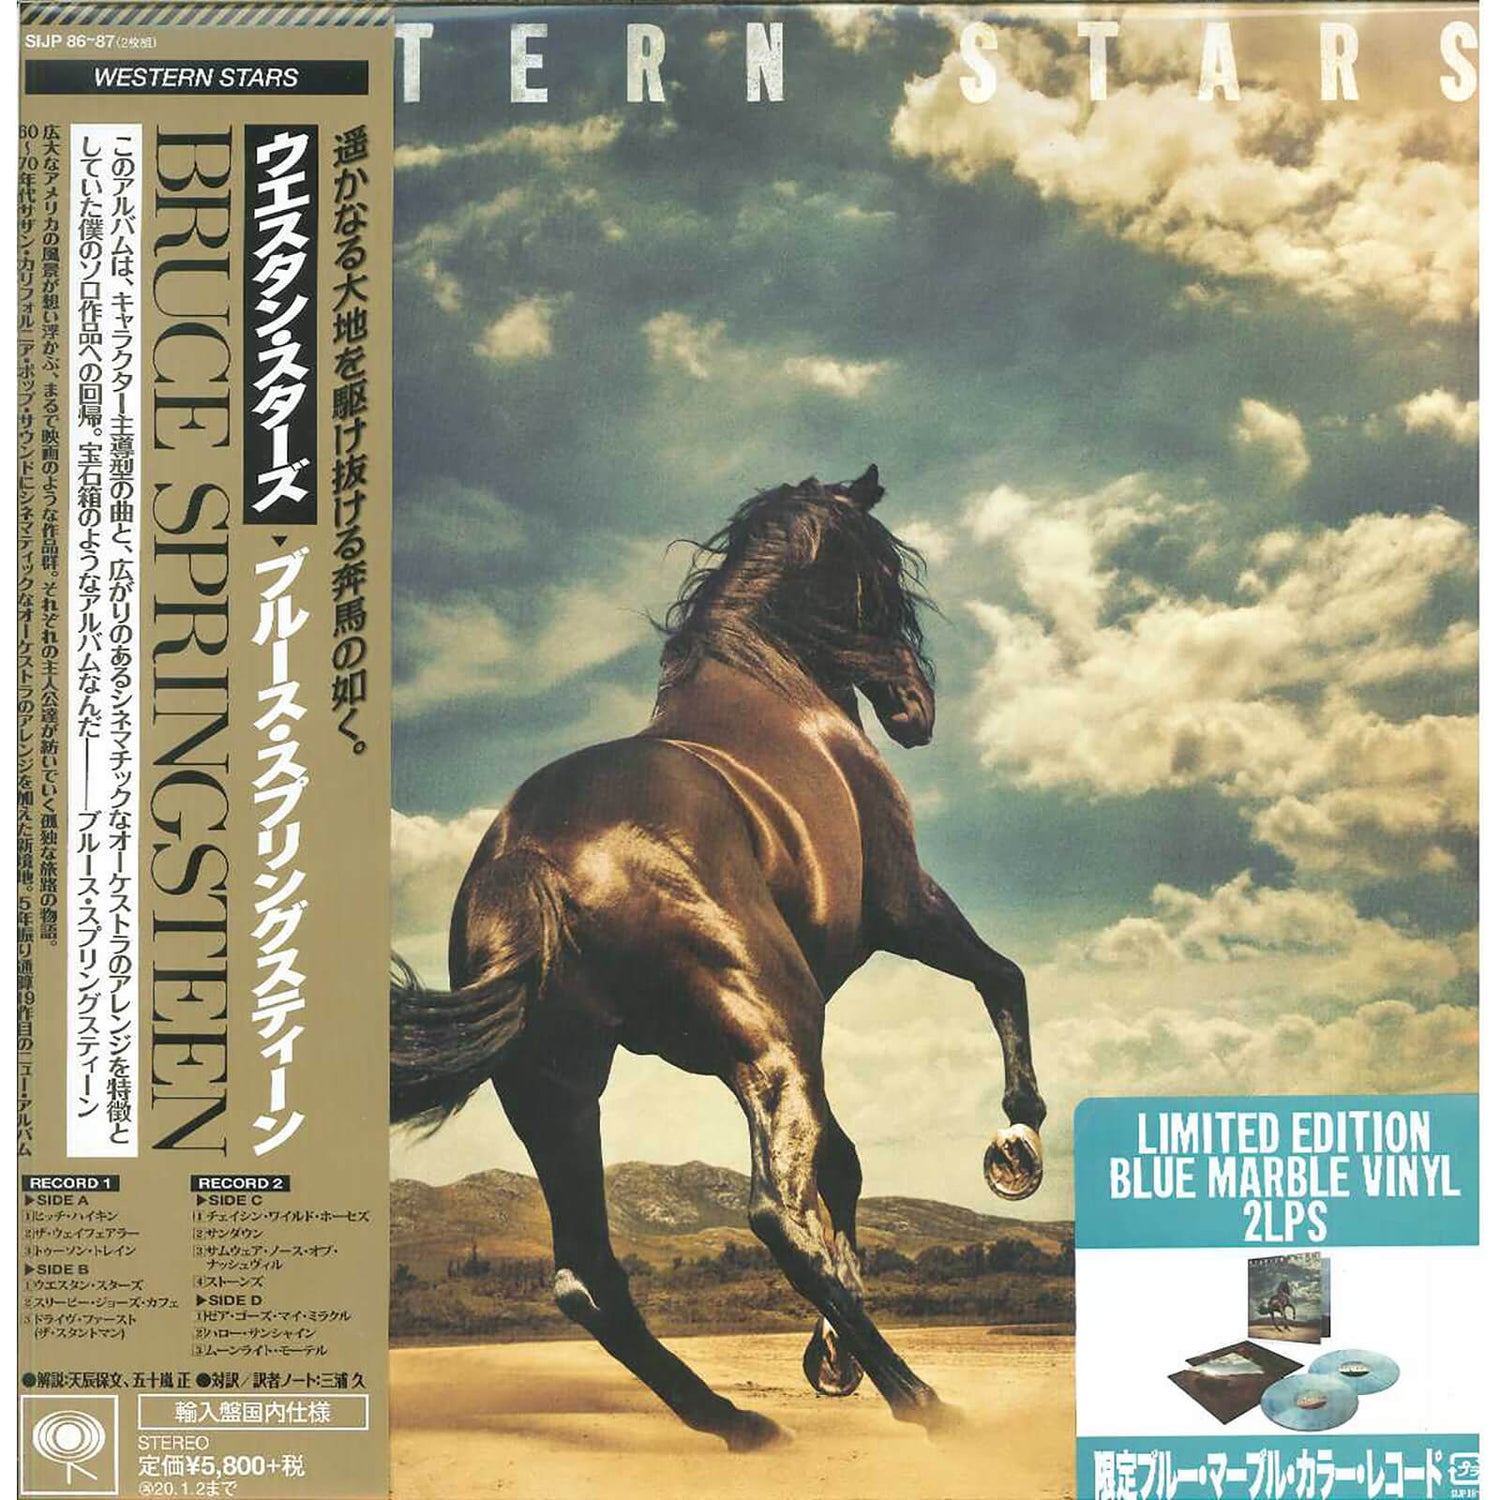 Bruce Springsteen - Western Stars LP Édition japonaise